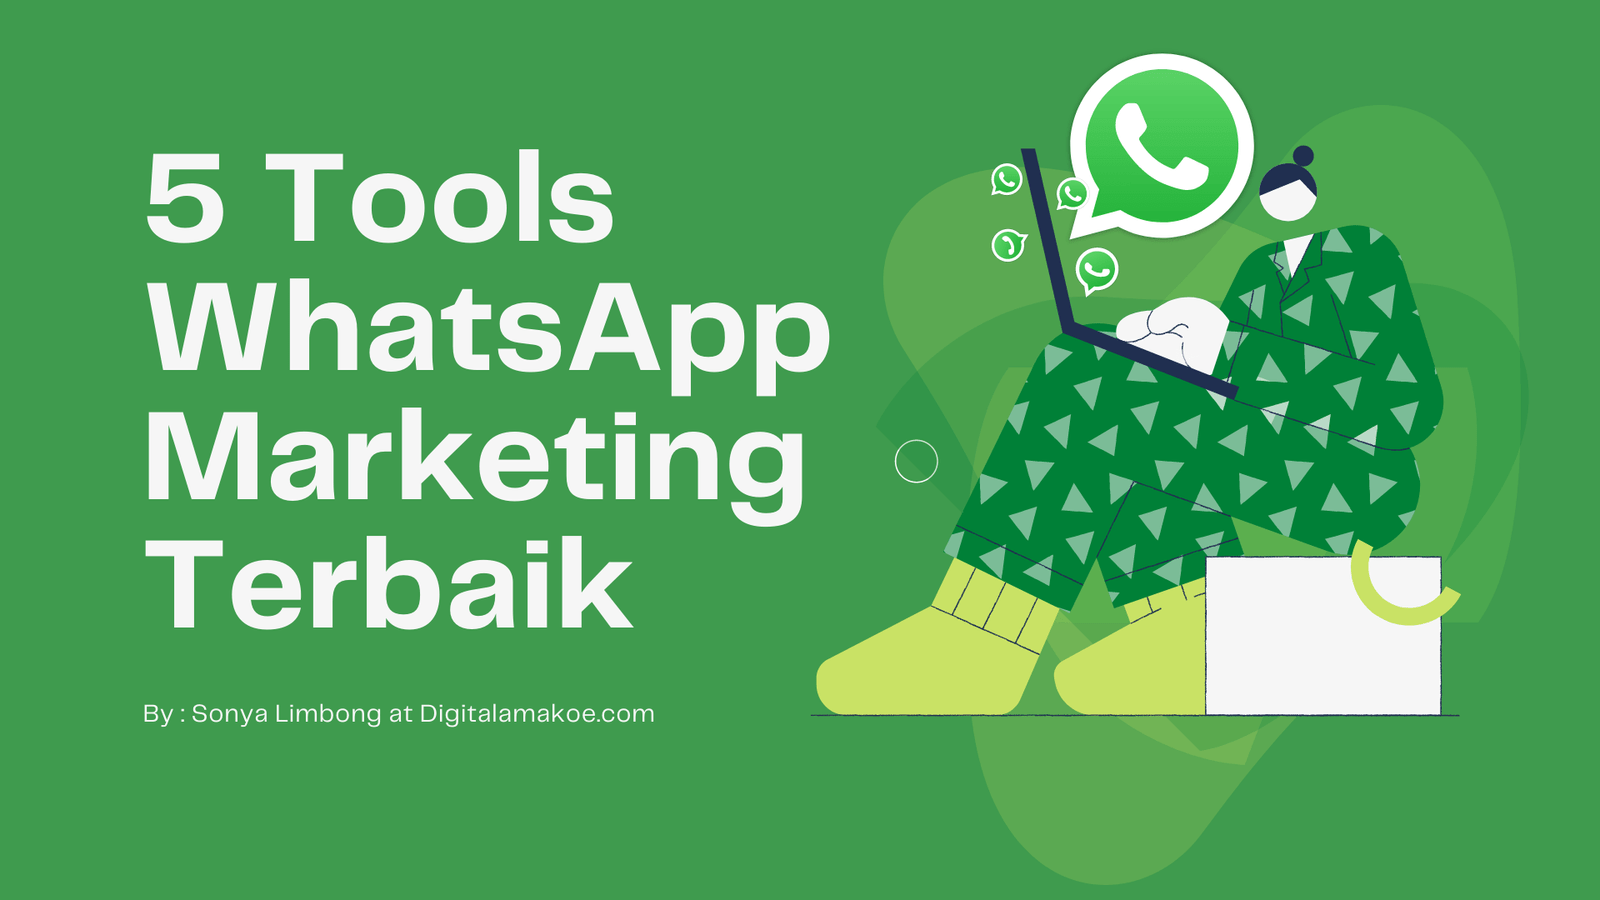 Tools WhatsApp Marketing